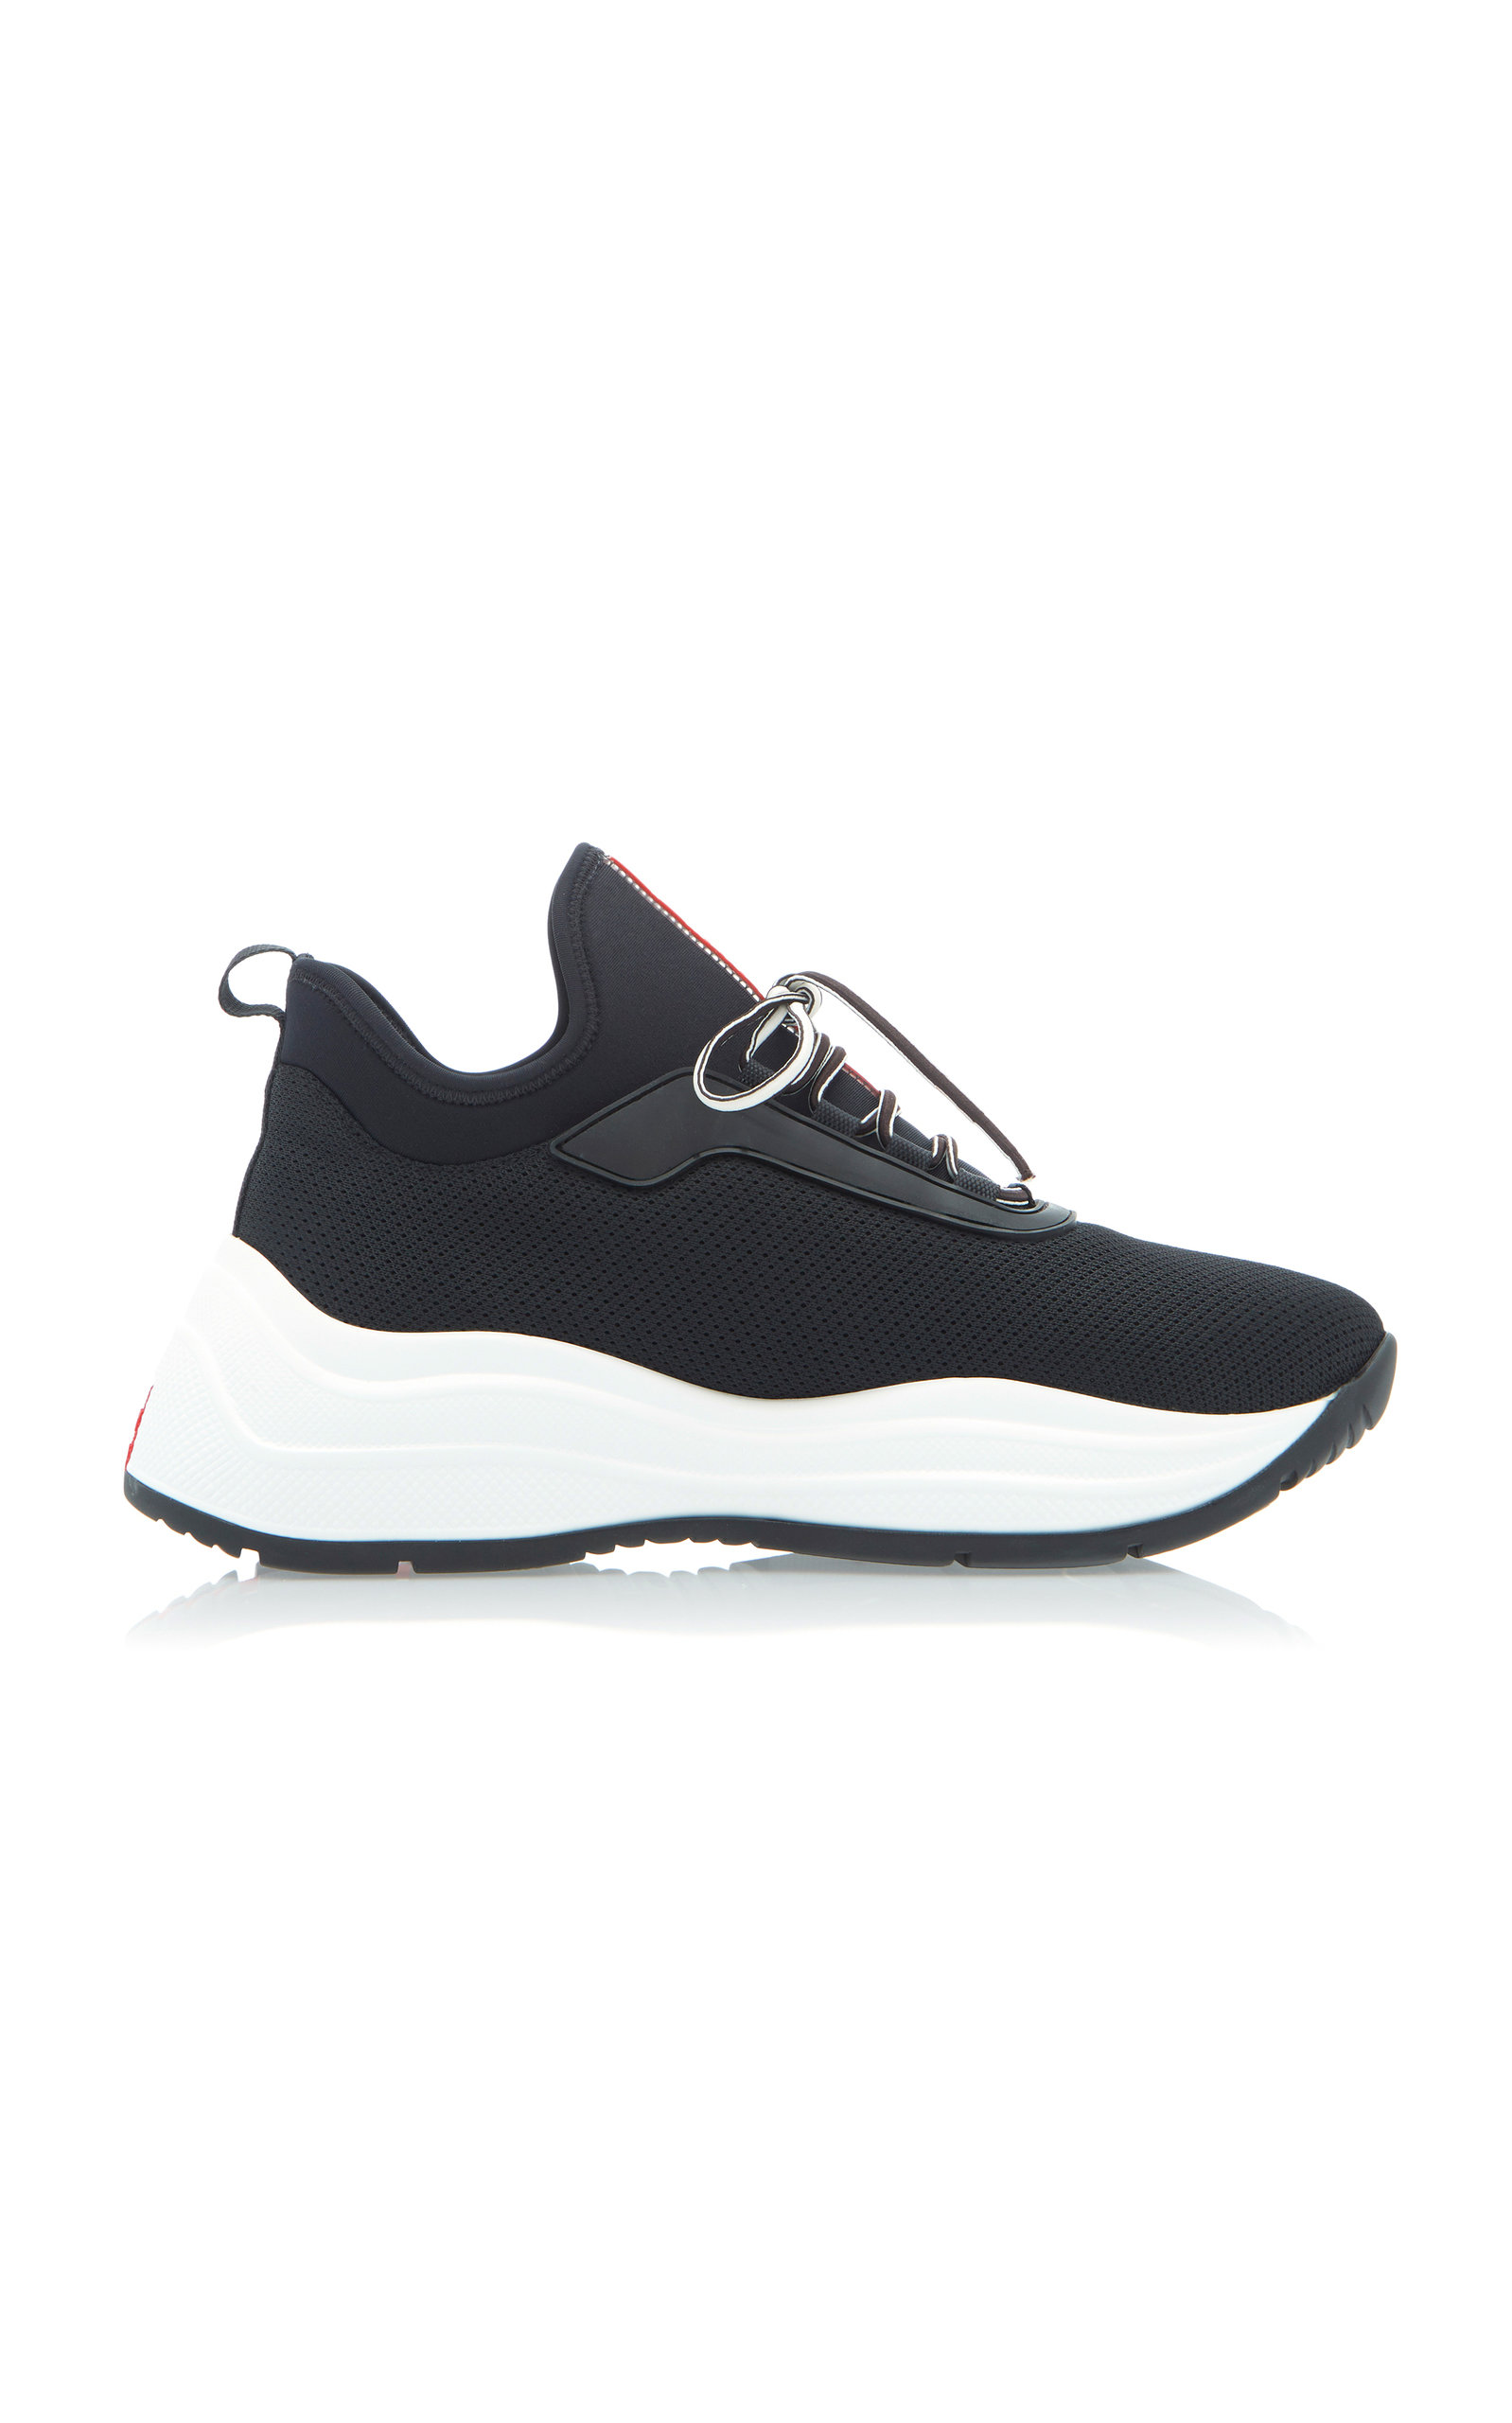 Prada - Women's Neoprene And Rubber Sneakers - Black - IT 40.5 - Moda Operandi